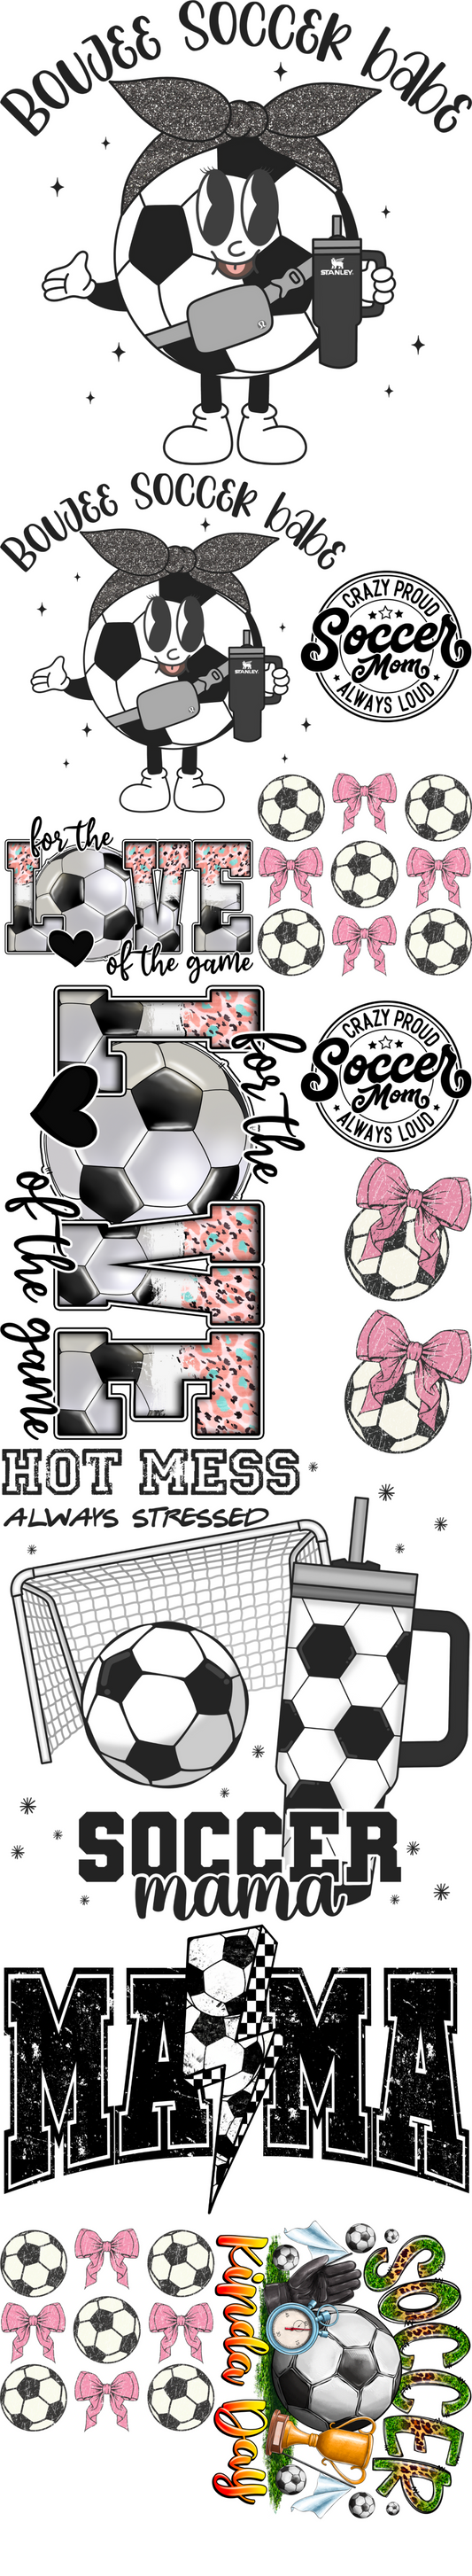 Soccer DTF Gang Sheet